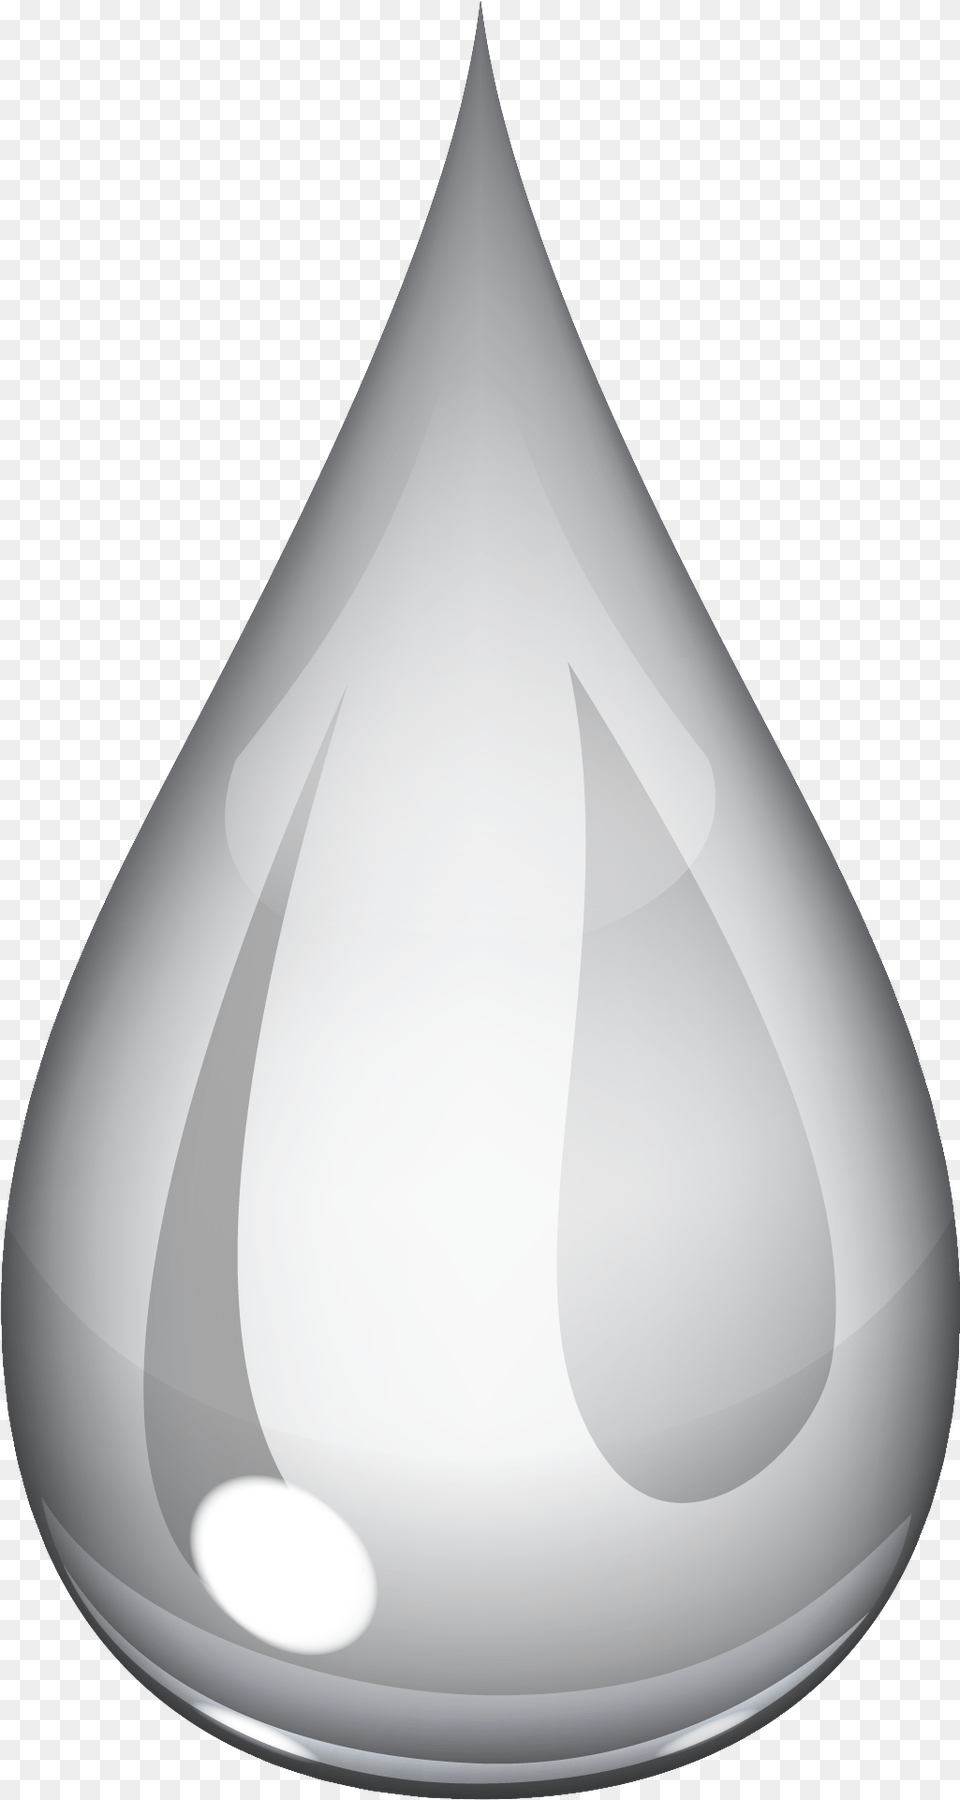 Water Drop Glass Grey Drop, Droplet, Lighting, Lamp, Jar Png Image